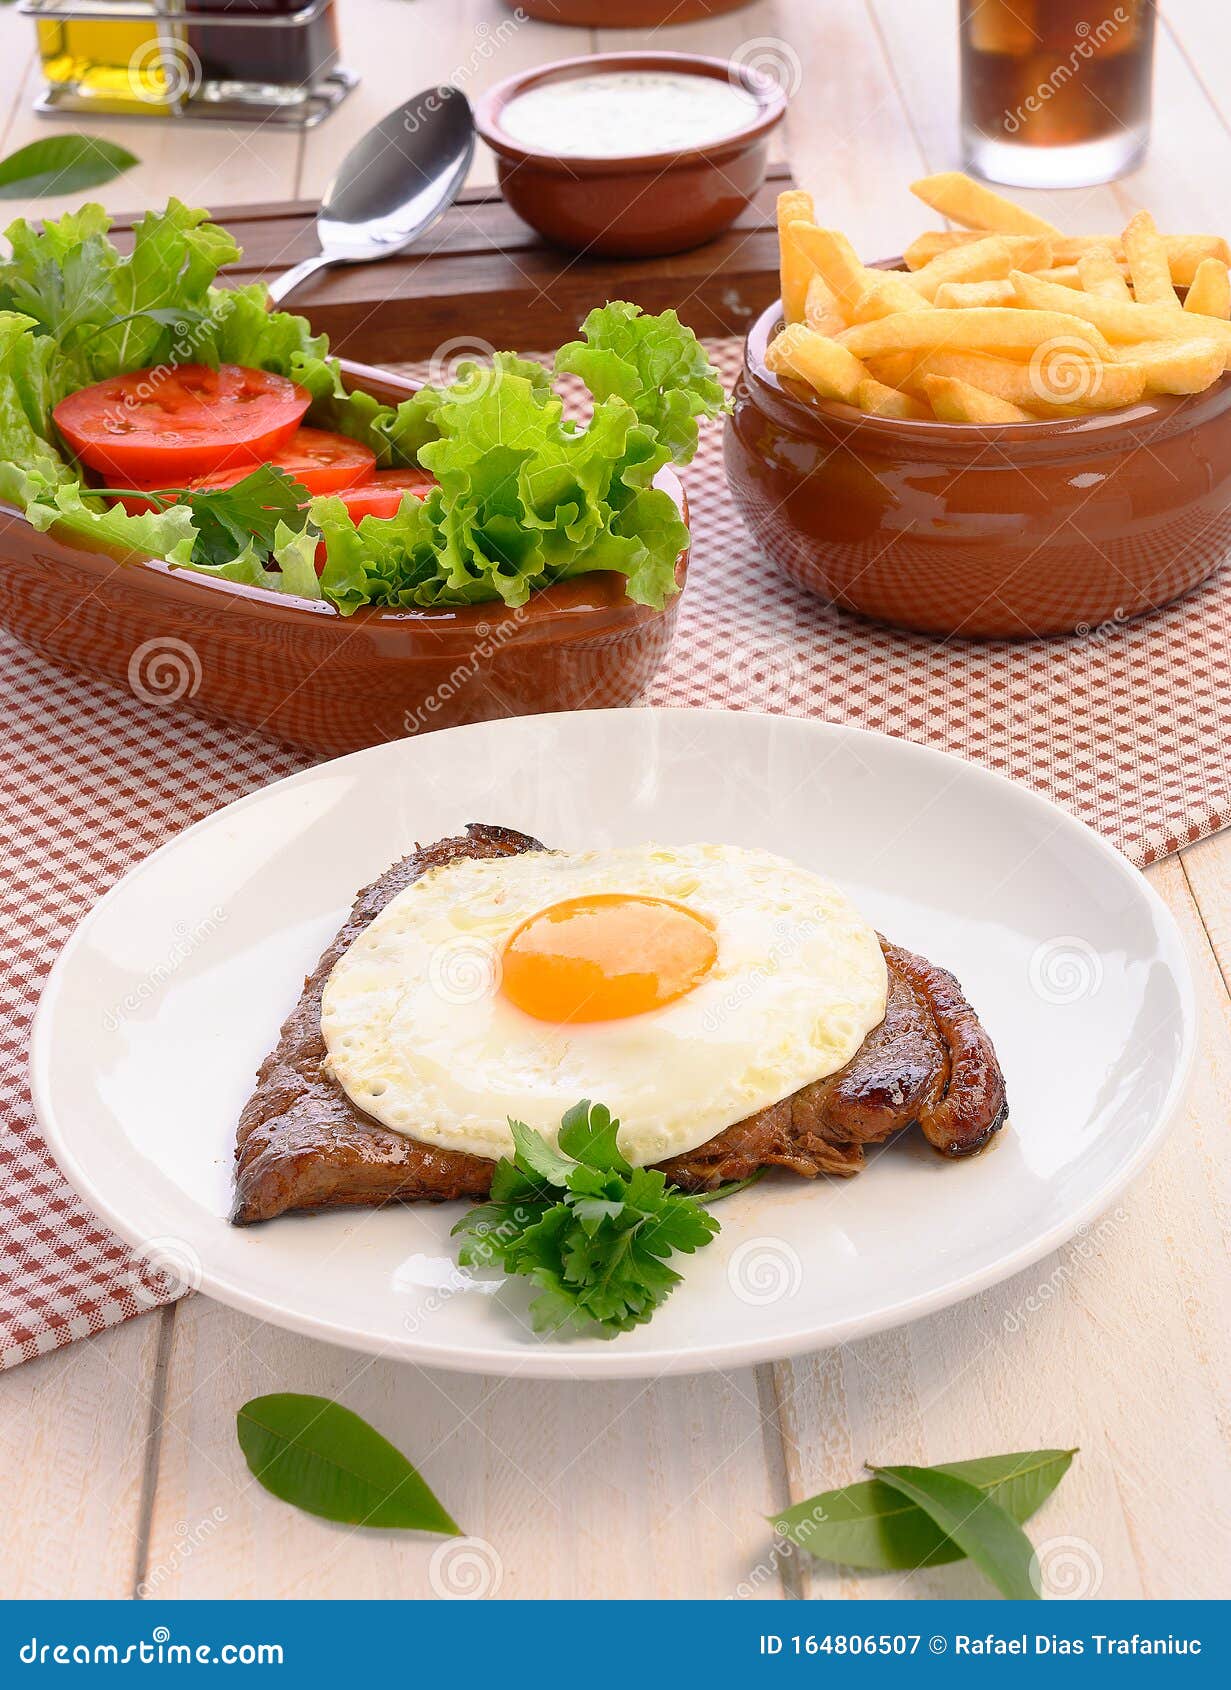 beef steak bife a cavalo - brazilian traditional food steaks, white rice, farofa and salad